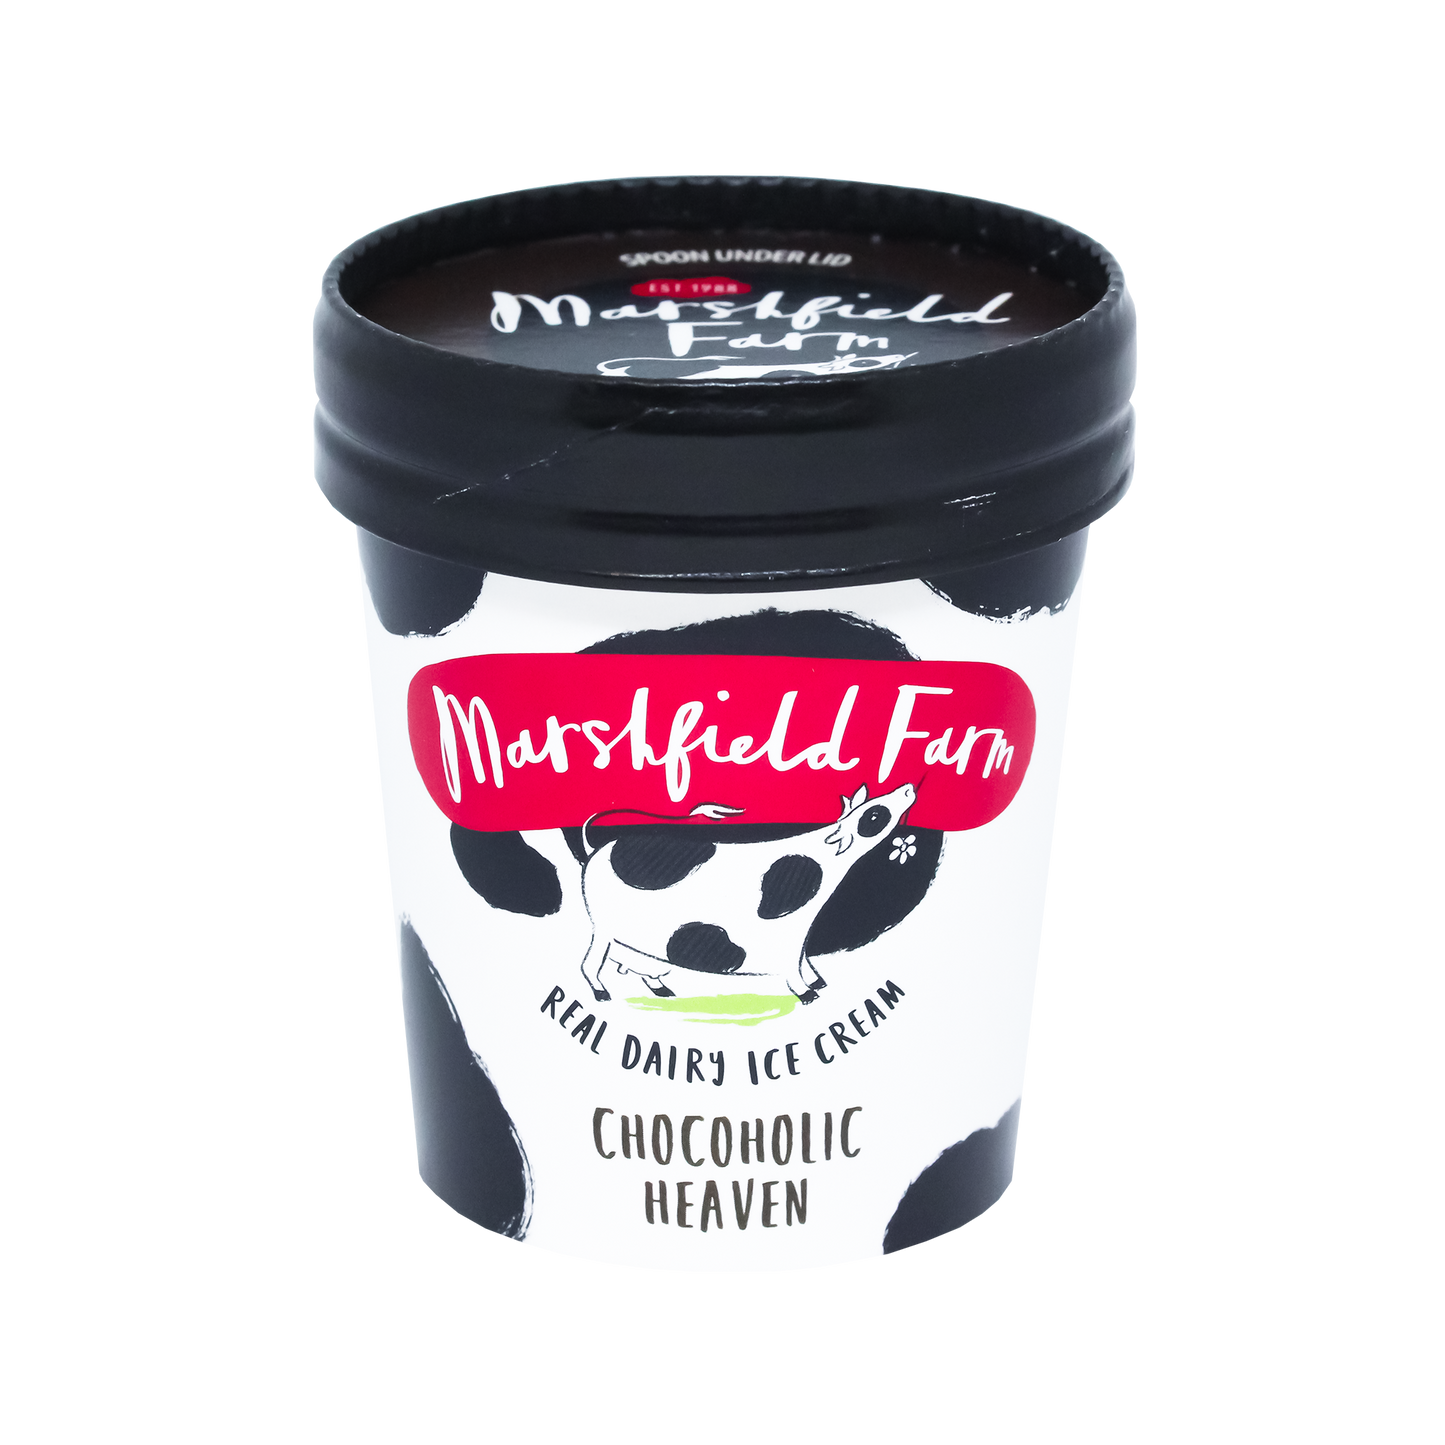 Marshfield Farm Chocoholic Heaven Ice Cream 125ml Tub